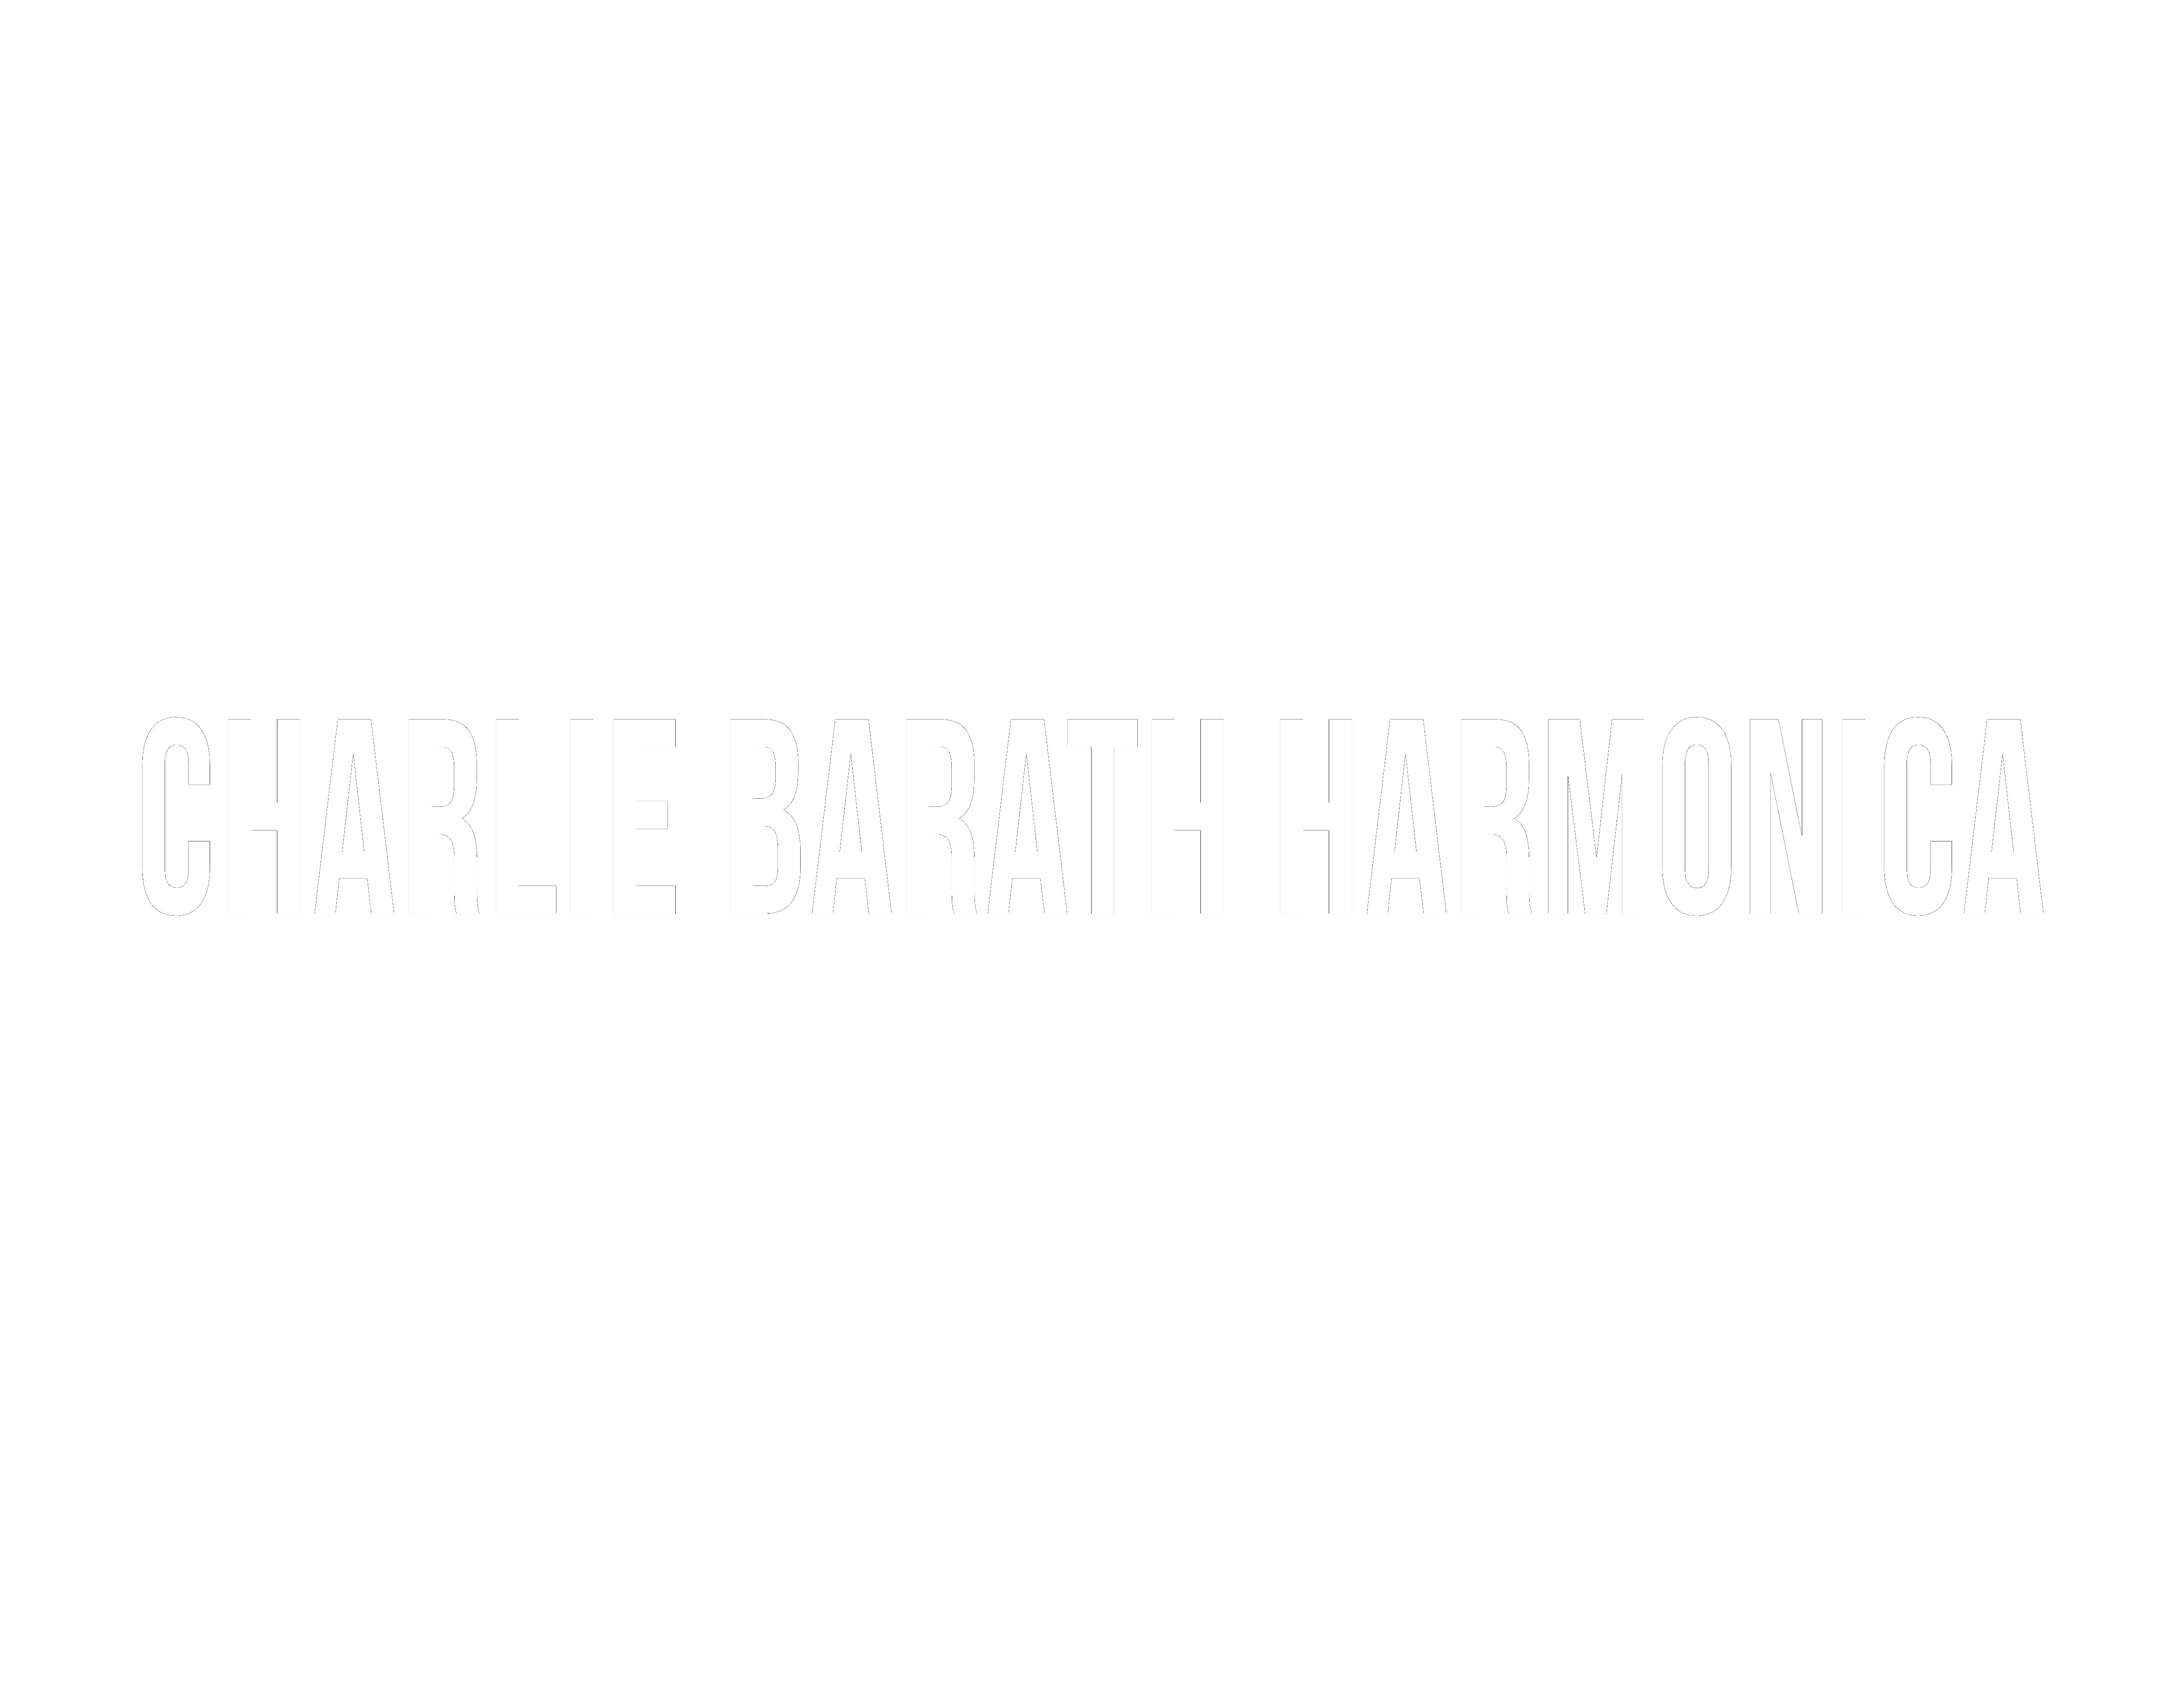 Charlie Barath Harmonica